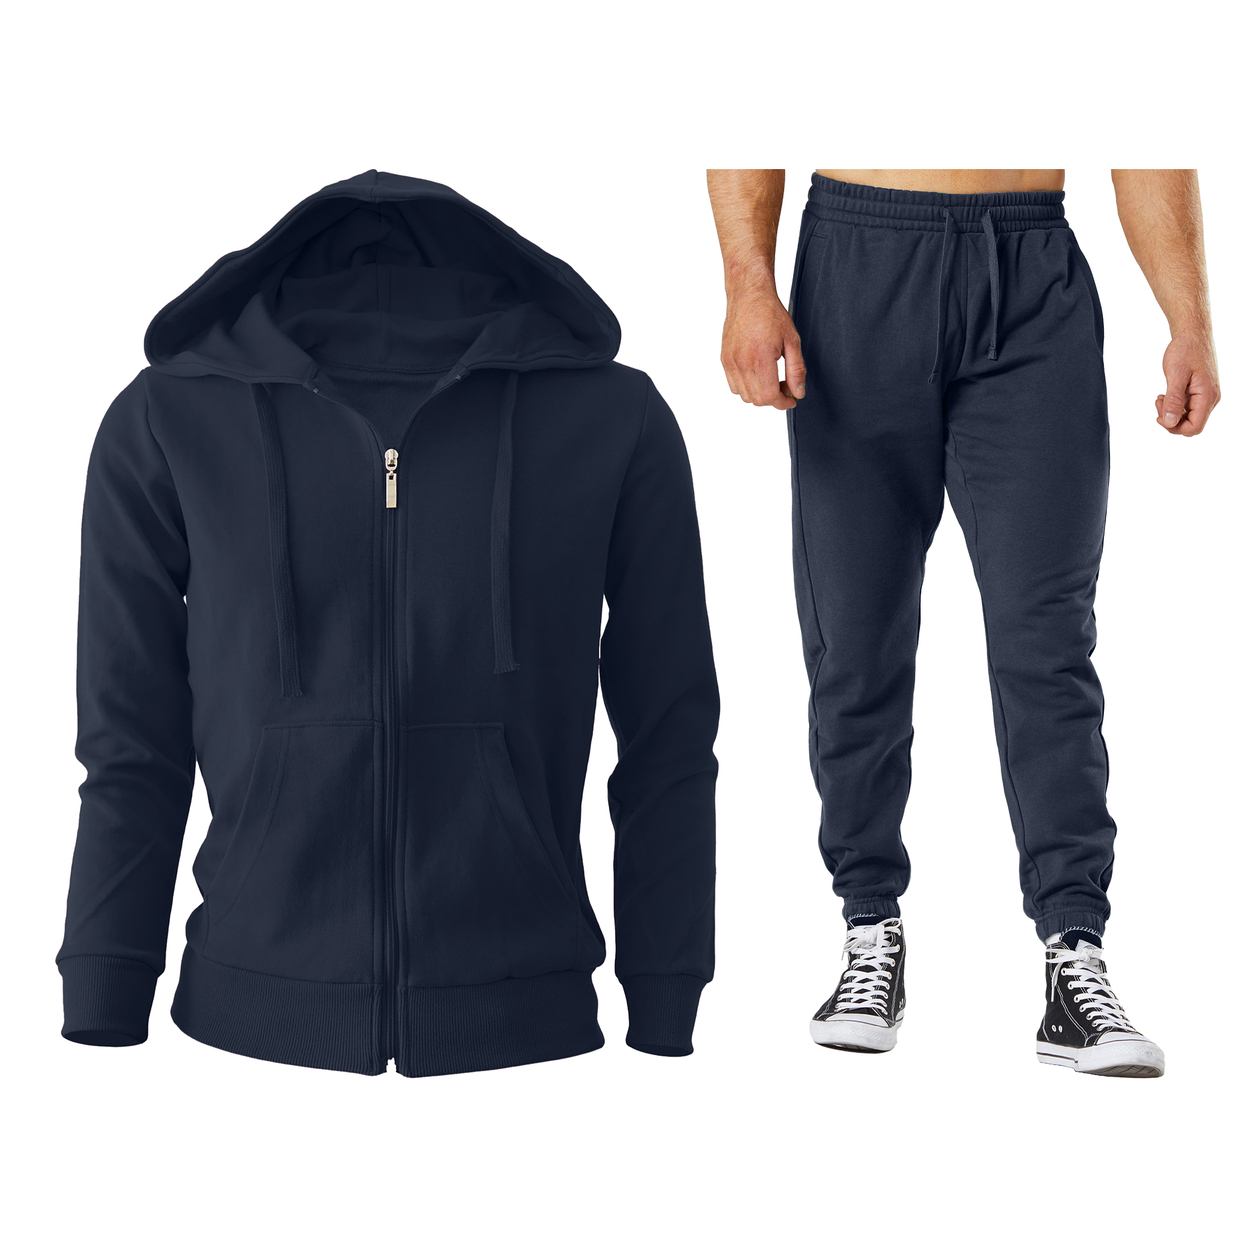 2-Piece: Men's Winter Warm Cozy Athletic Multi-Pockets BIG & TALL Sweatsuit Set - Charcoal, 3xl